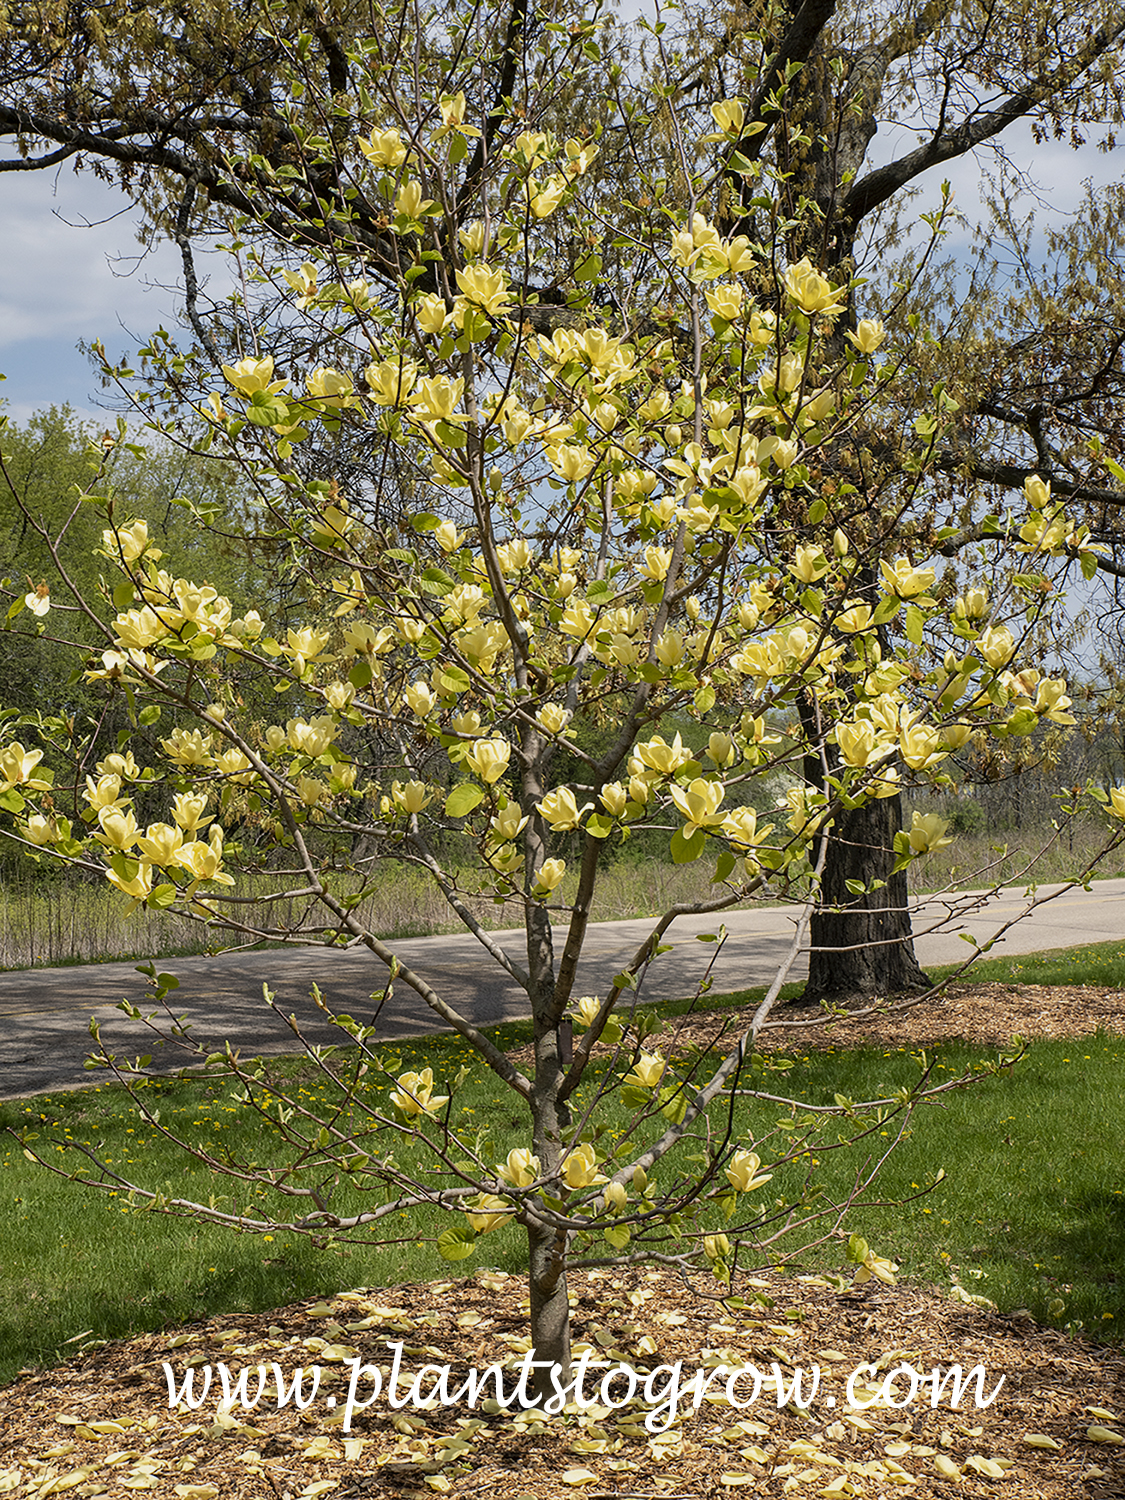 Magnolia 'Lois'
A yellow Magnolia introduced in circa 2012